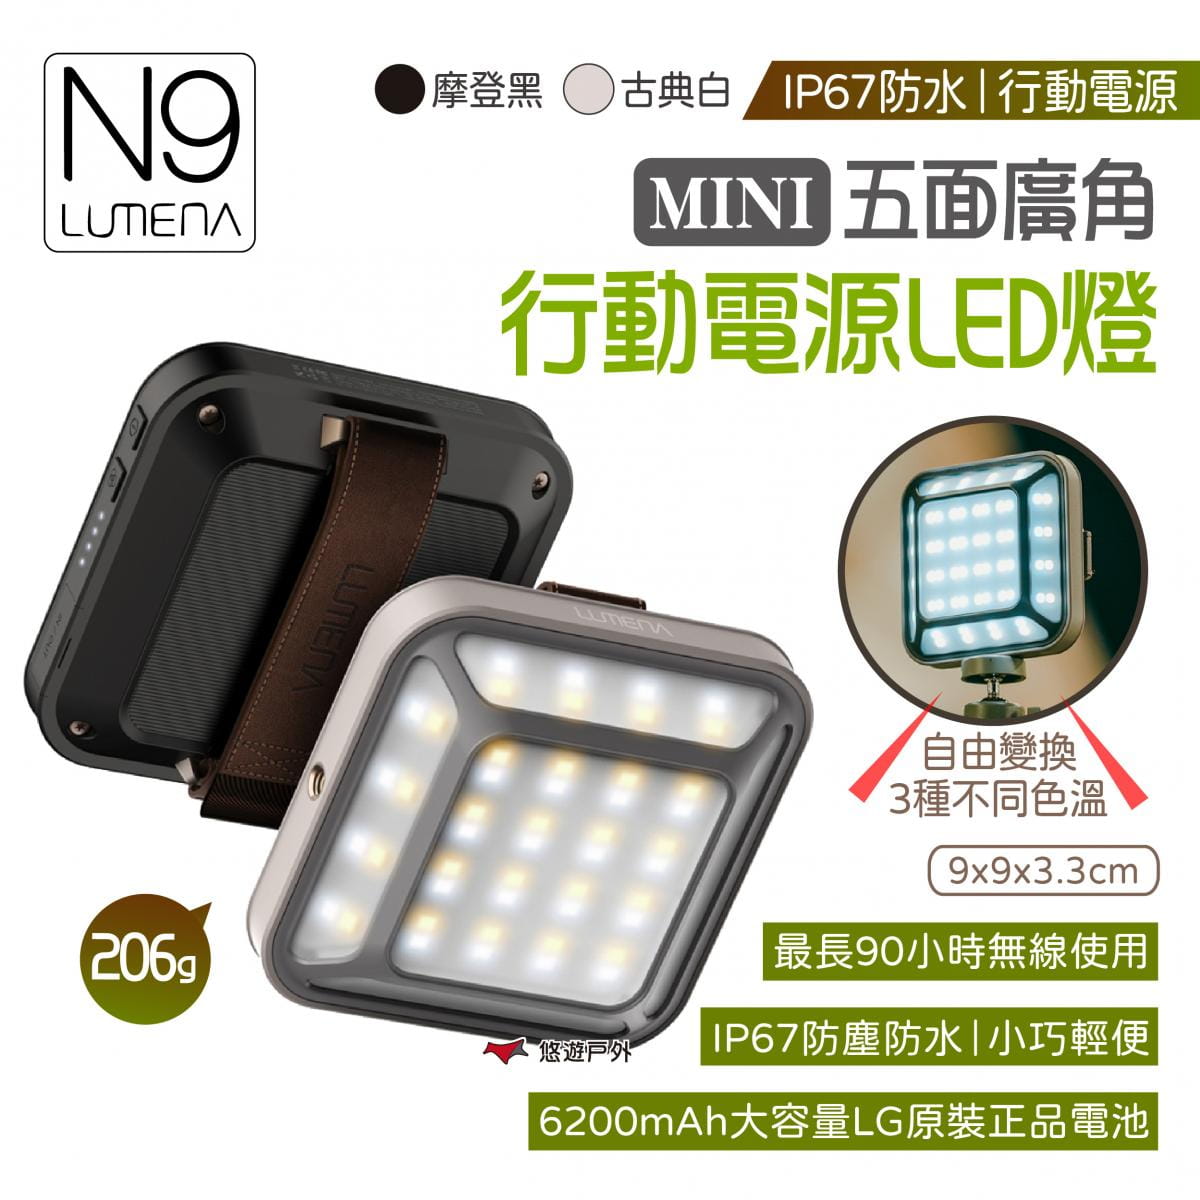 【N9 LUMENA】MINI 五面廣角行動電源LED燈 (悠遊戶外) 0